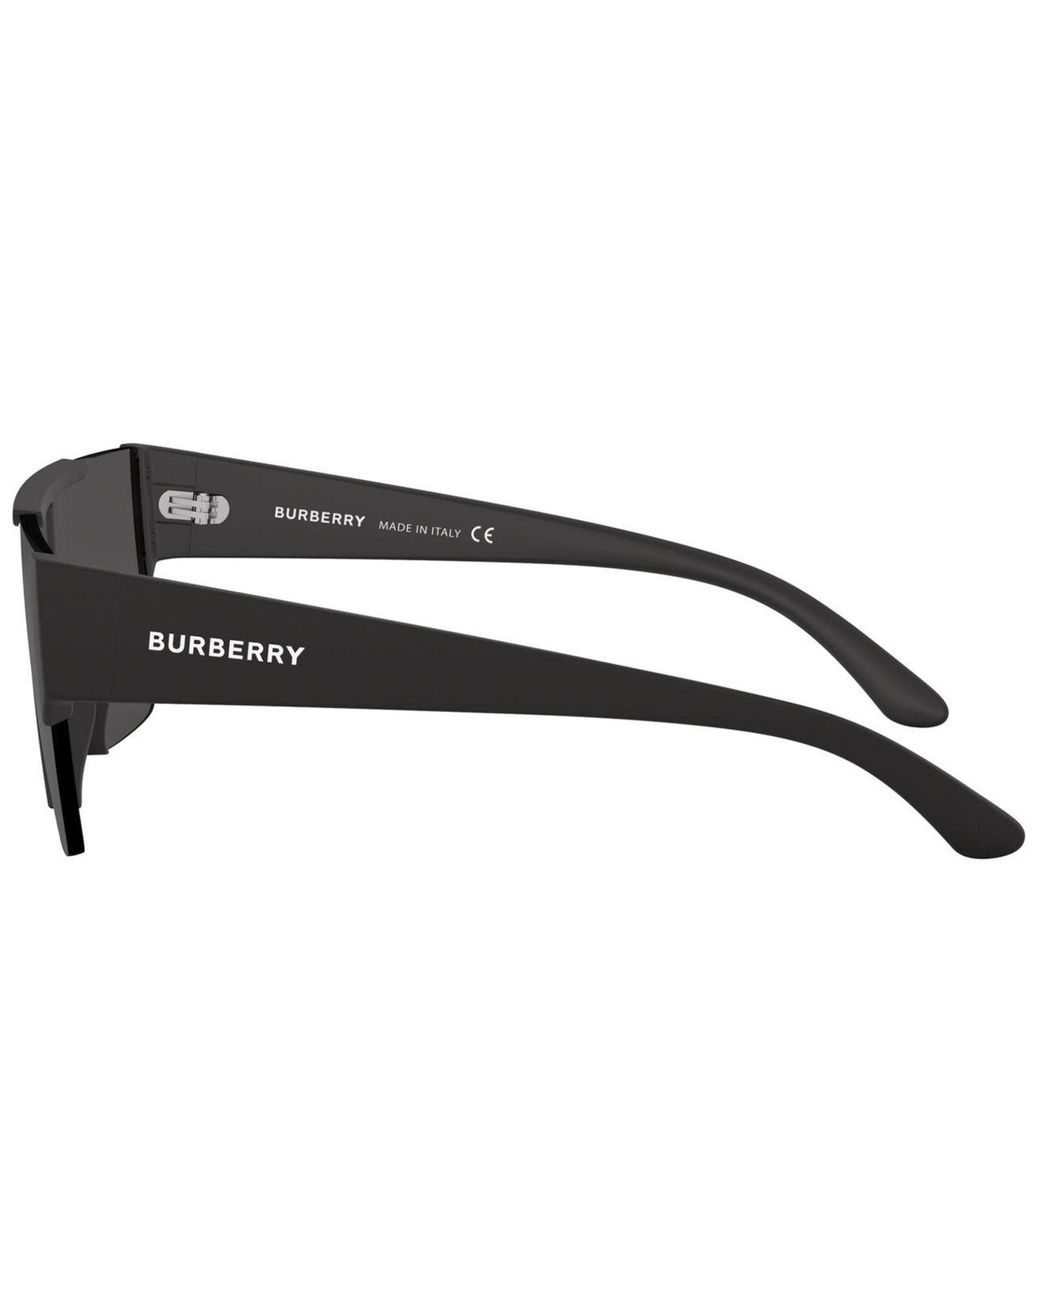 burberry sunglasses 4291